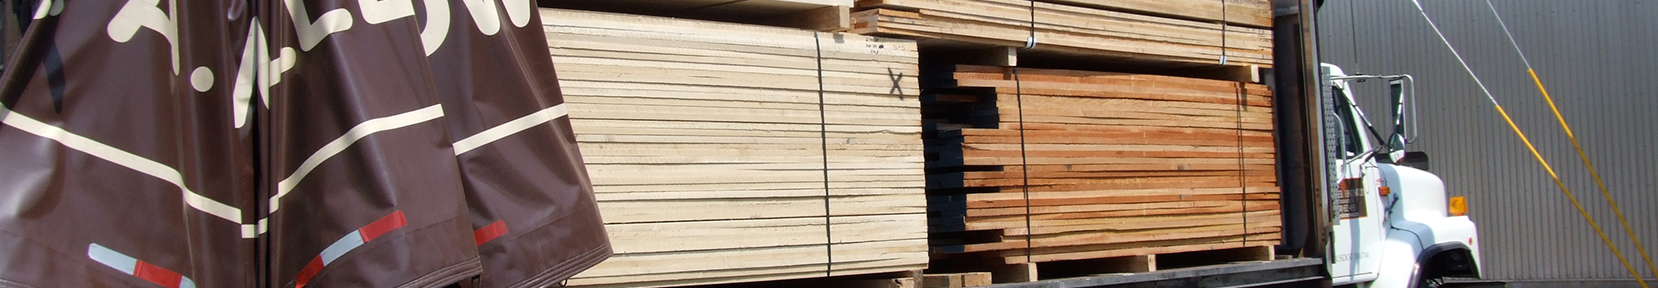 Miller Marquart Lumber - Moulding